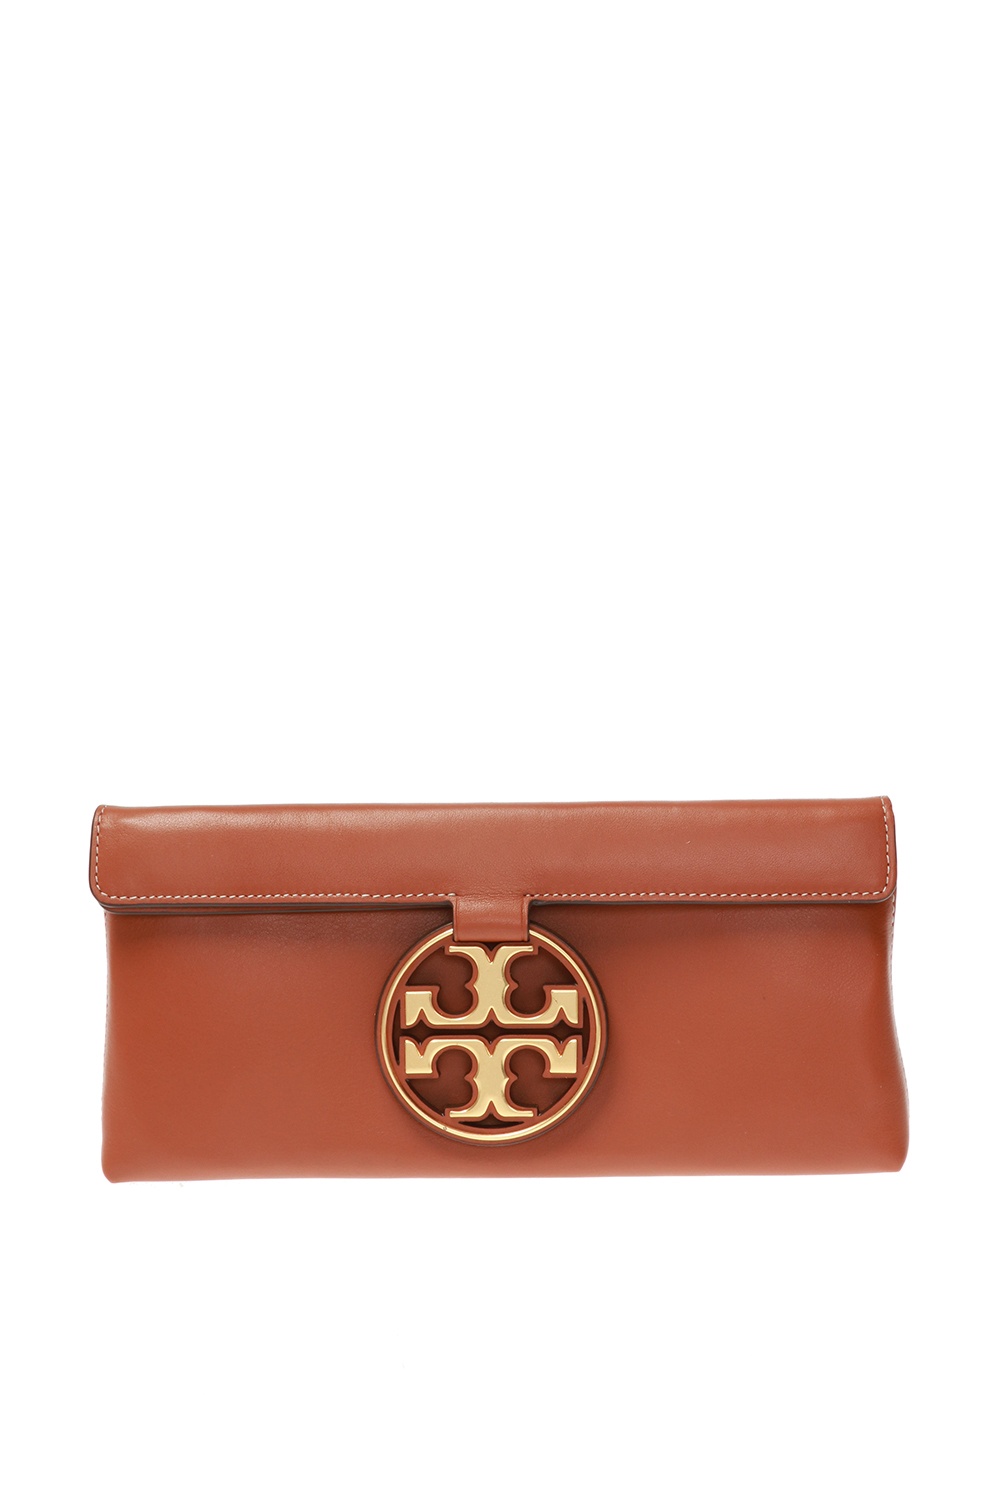 Brown Leather clutch with logo Tory Burch - Vitkac Australia